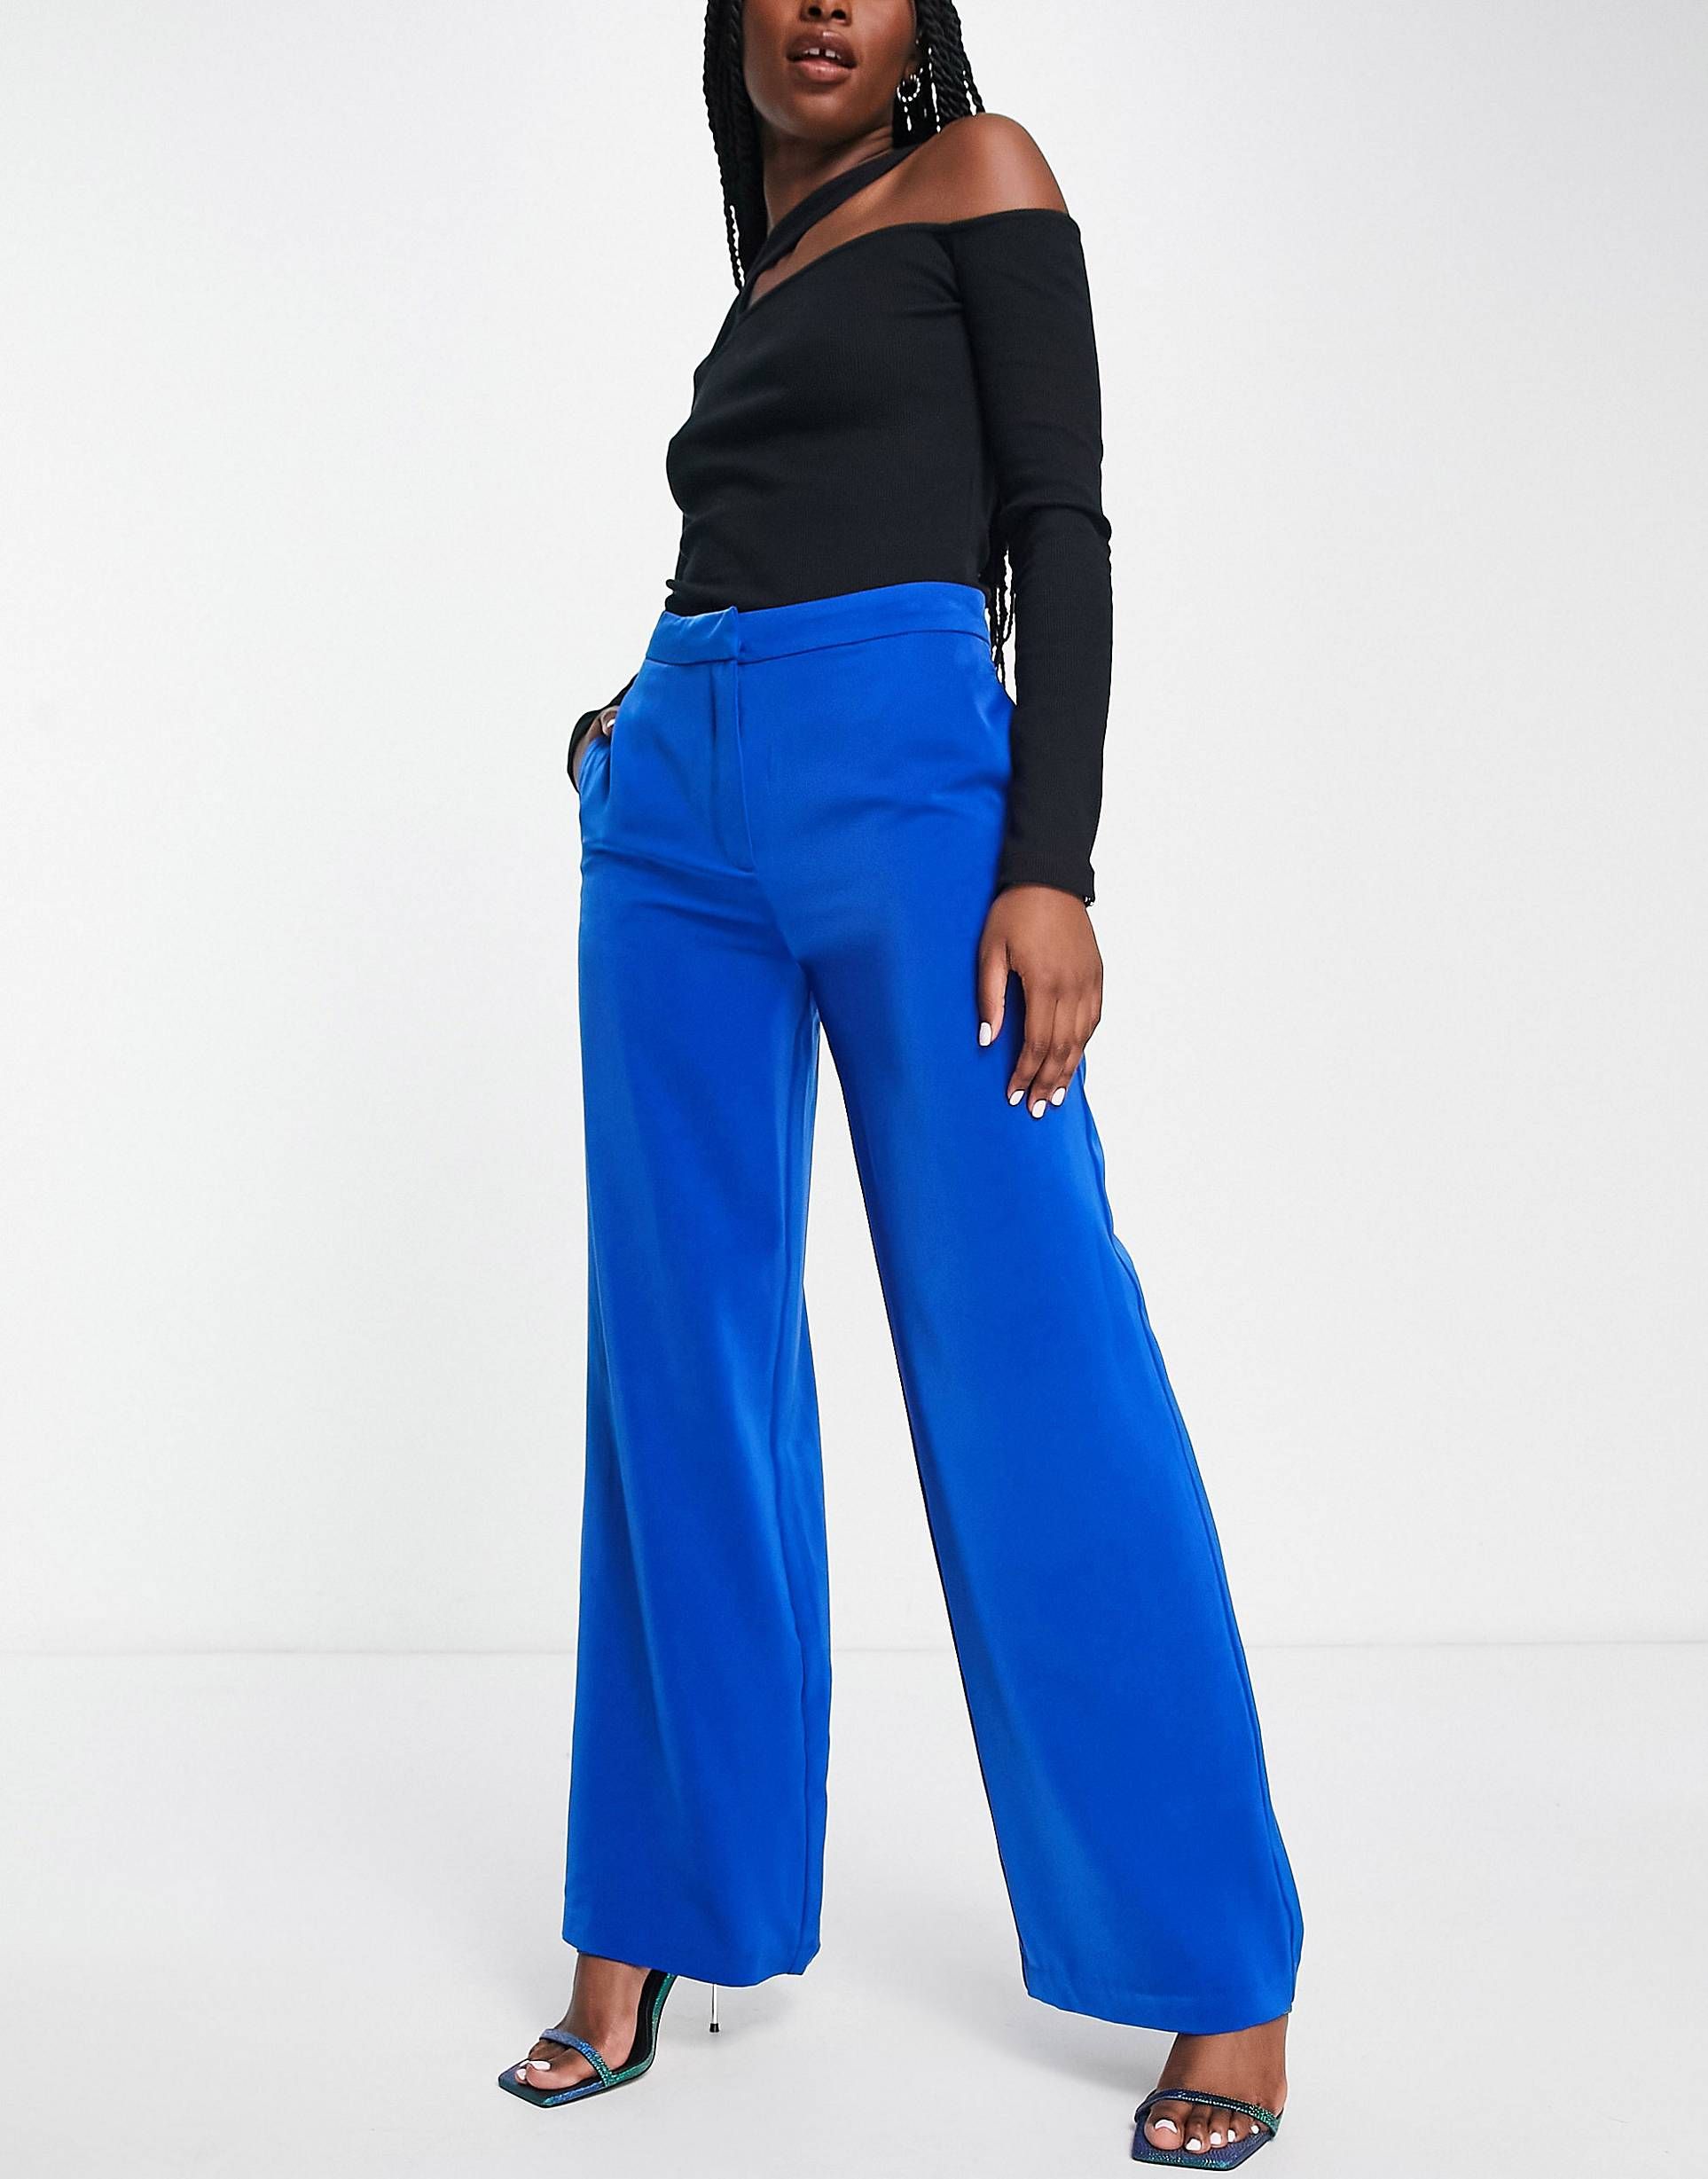 navy blue formal pants for women